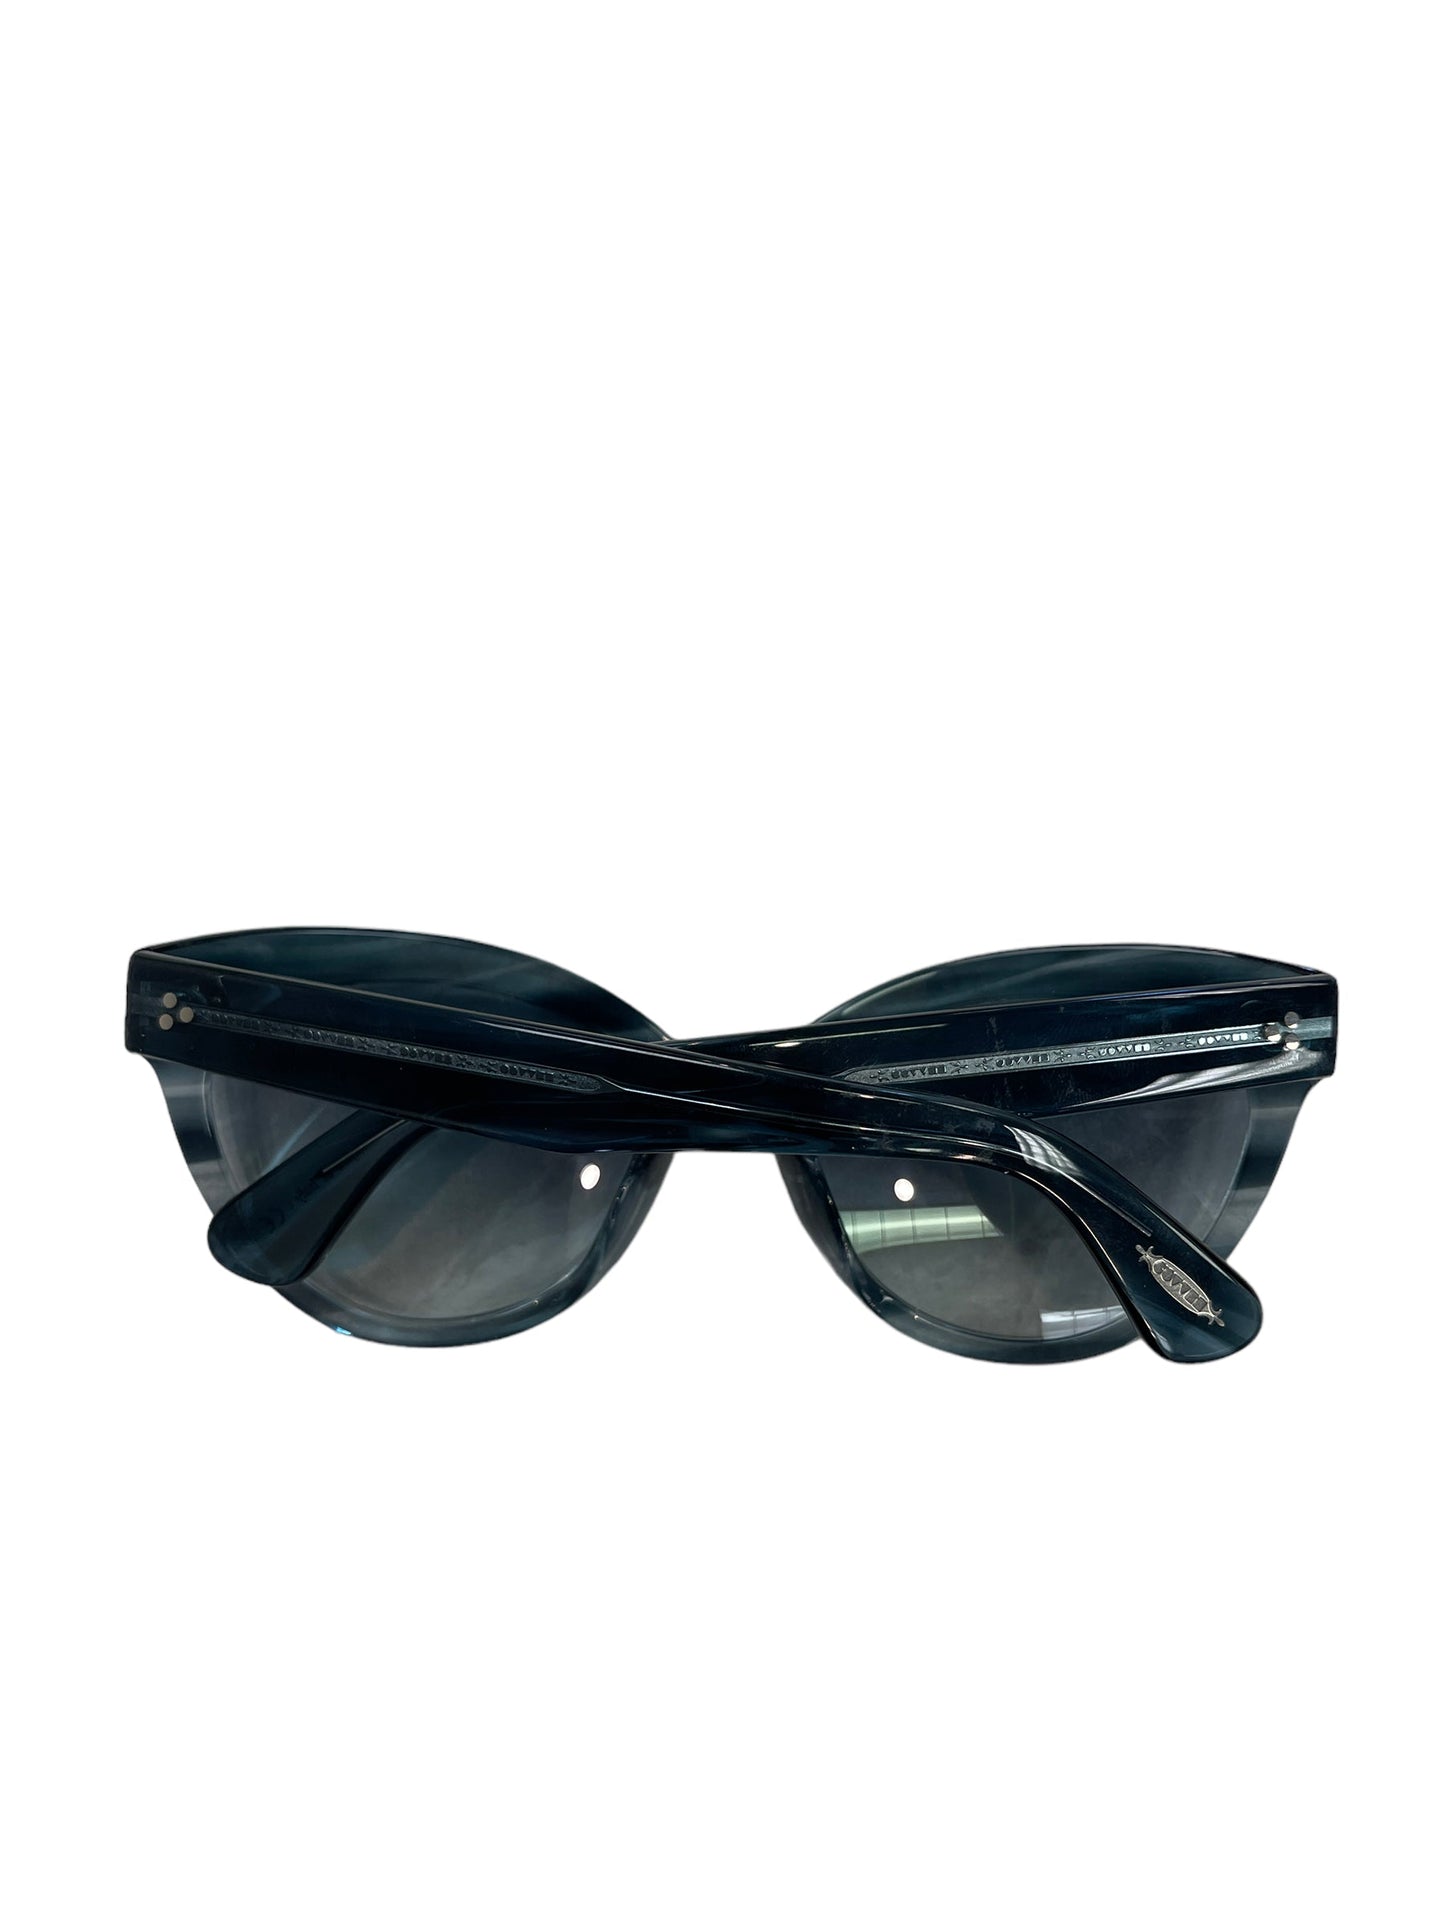 Sunglasses Designer By Cma